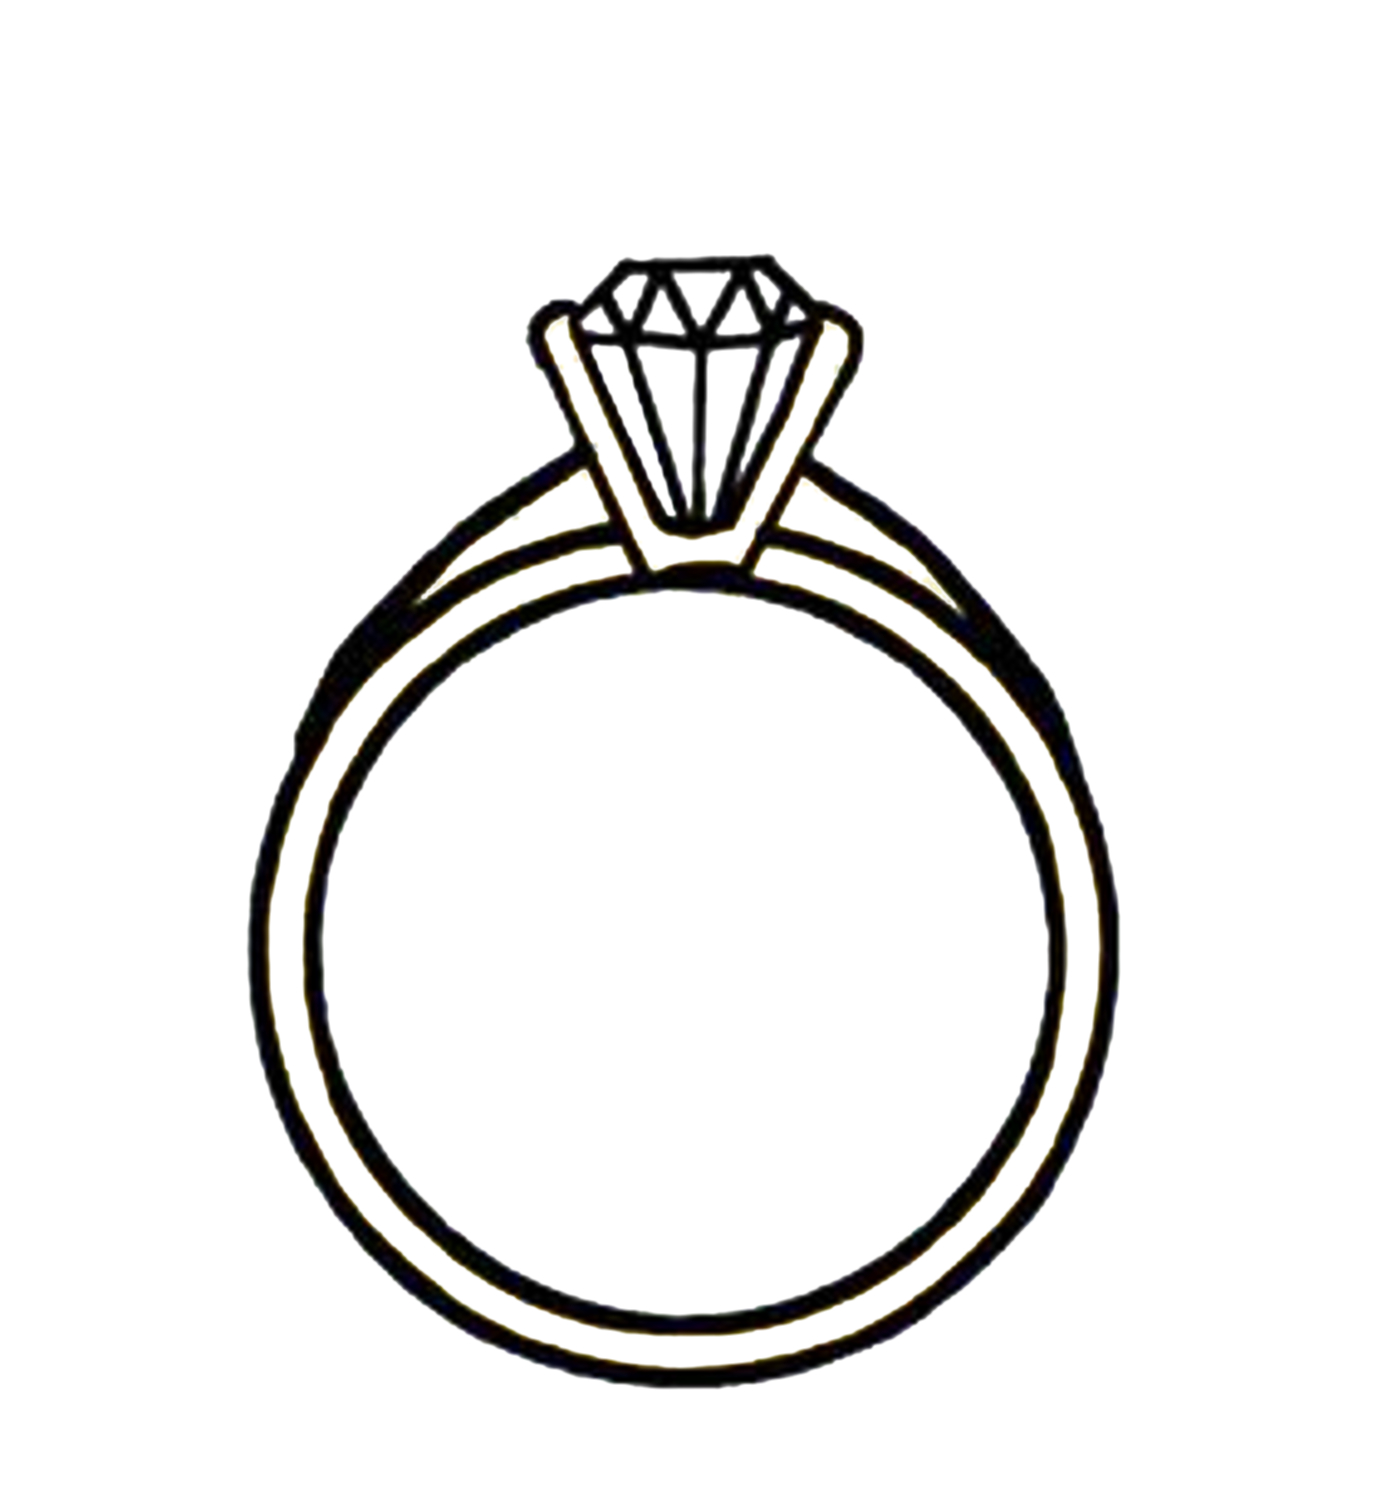 Clipart Wedding Rings - ClipArt Best - ClipArt Best